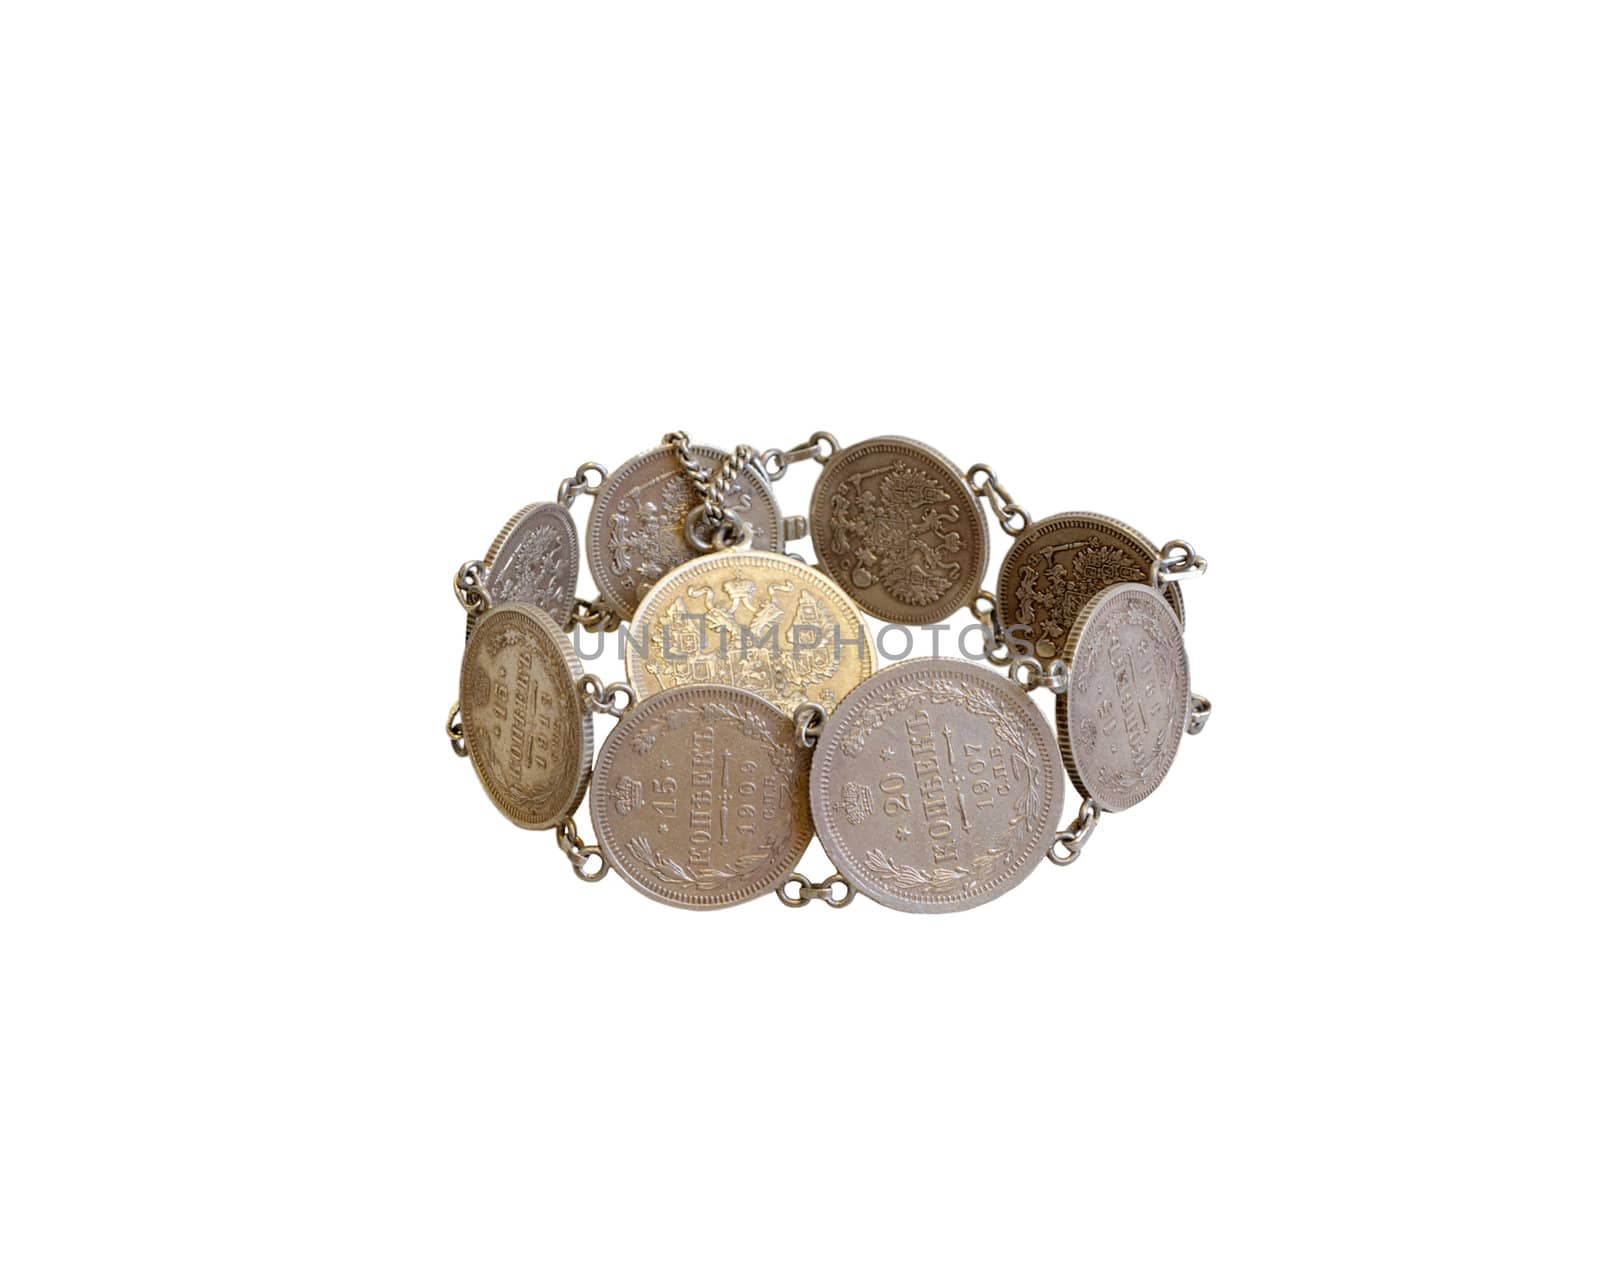 Bracelet of old coins by Roka